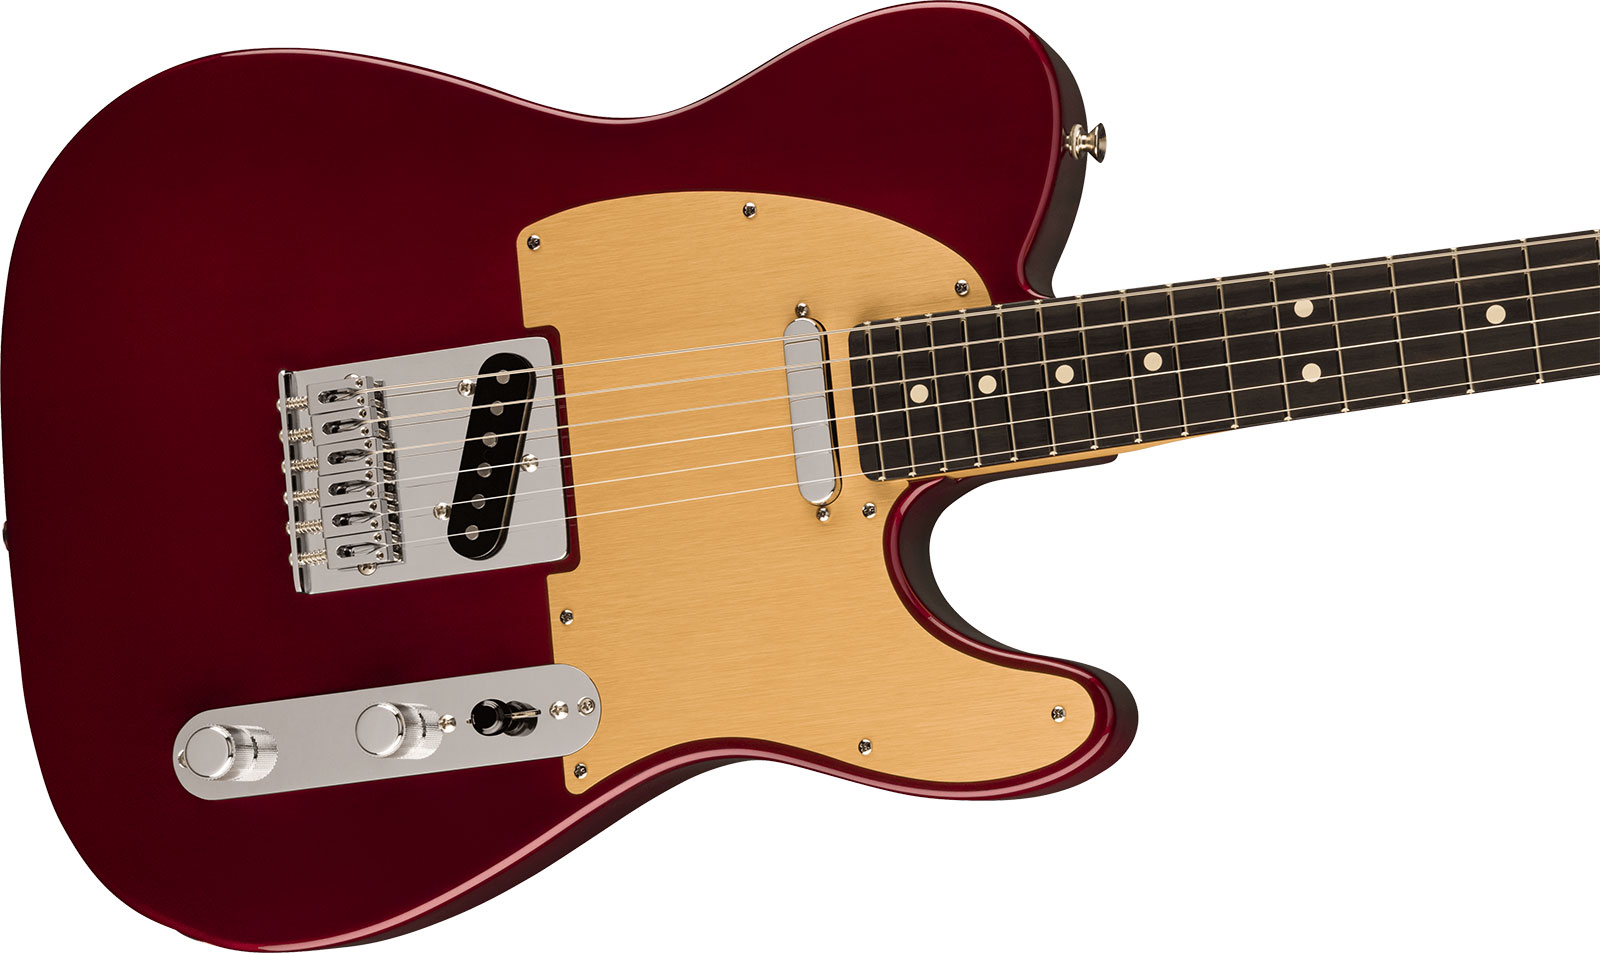 Fender Tele Player Ltd Mex 2s Pure Vintage Ht Eb - Oxblood - Tel shape electric guitar - Variation 2